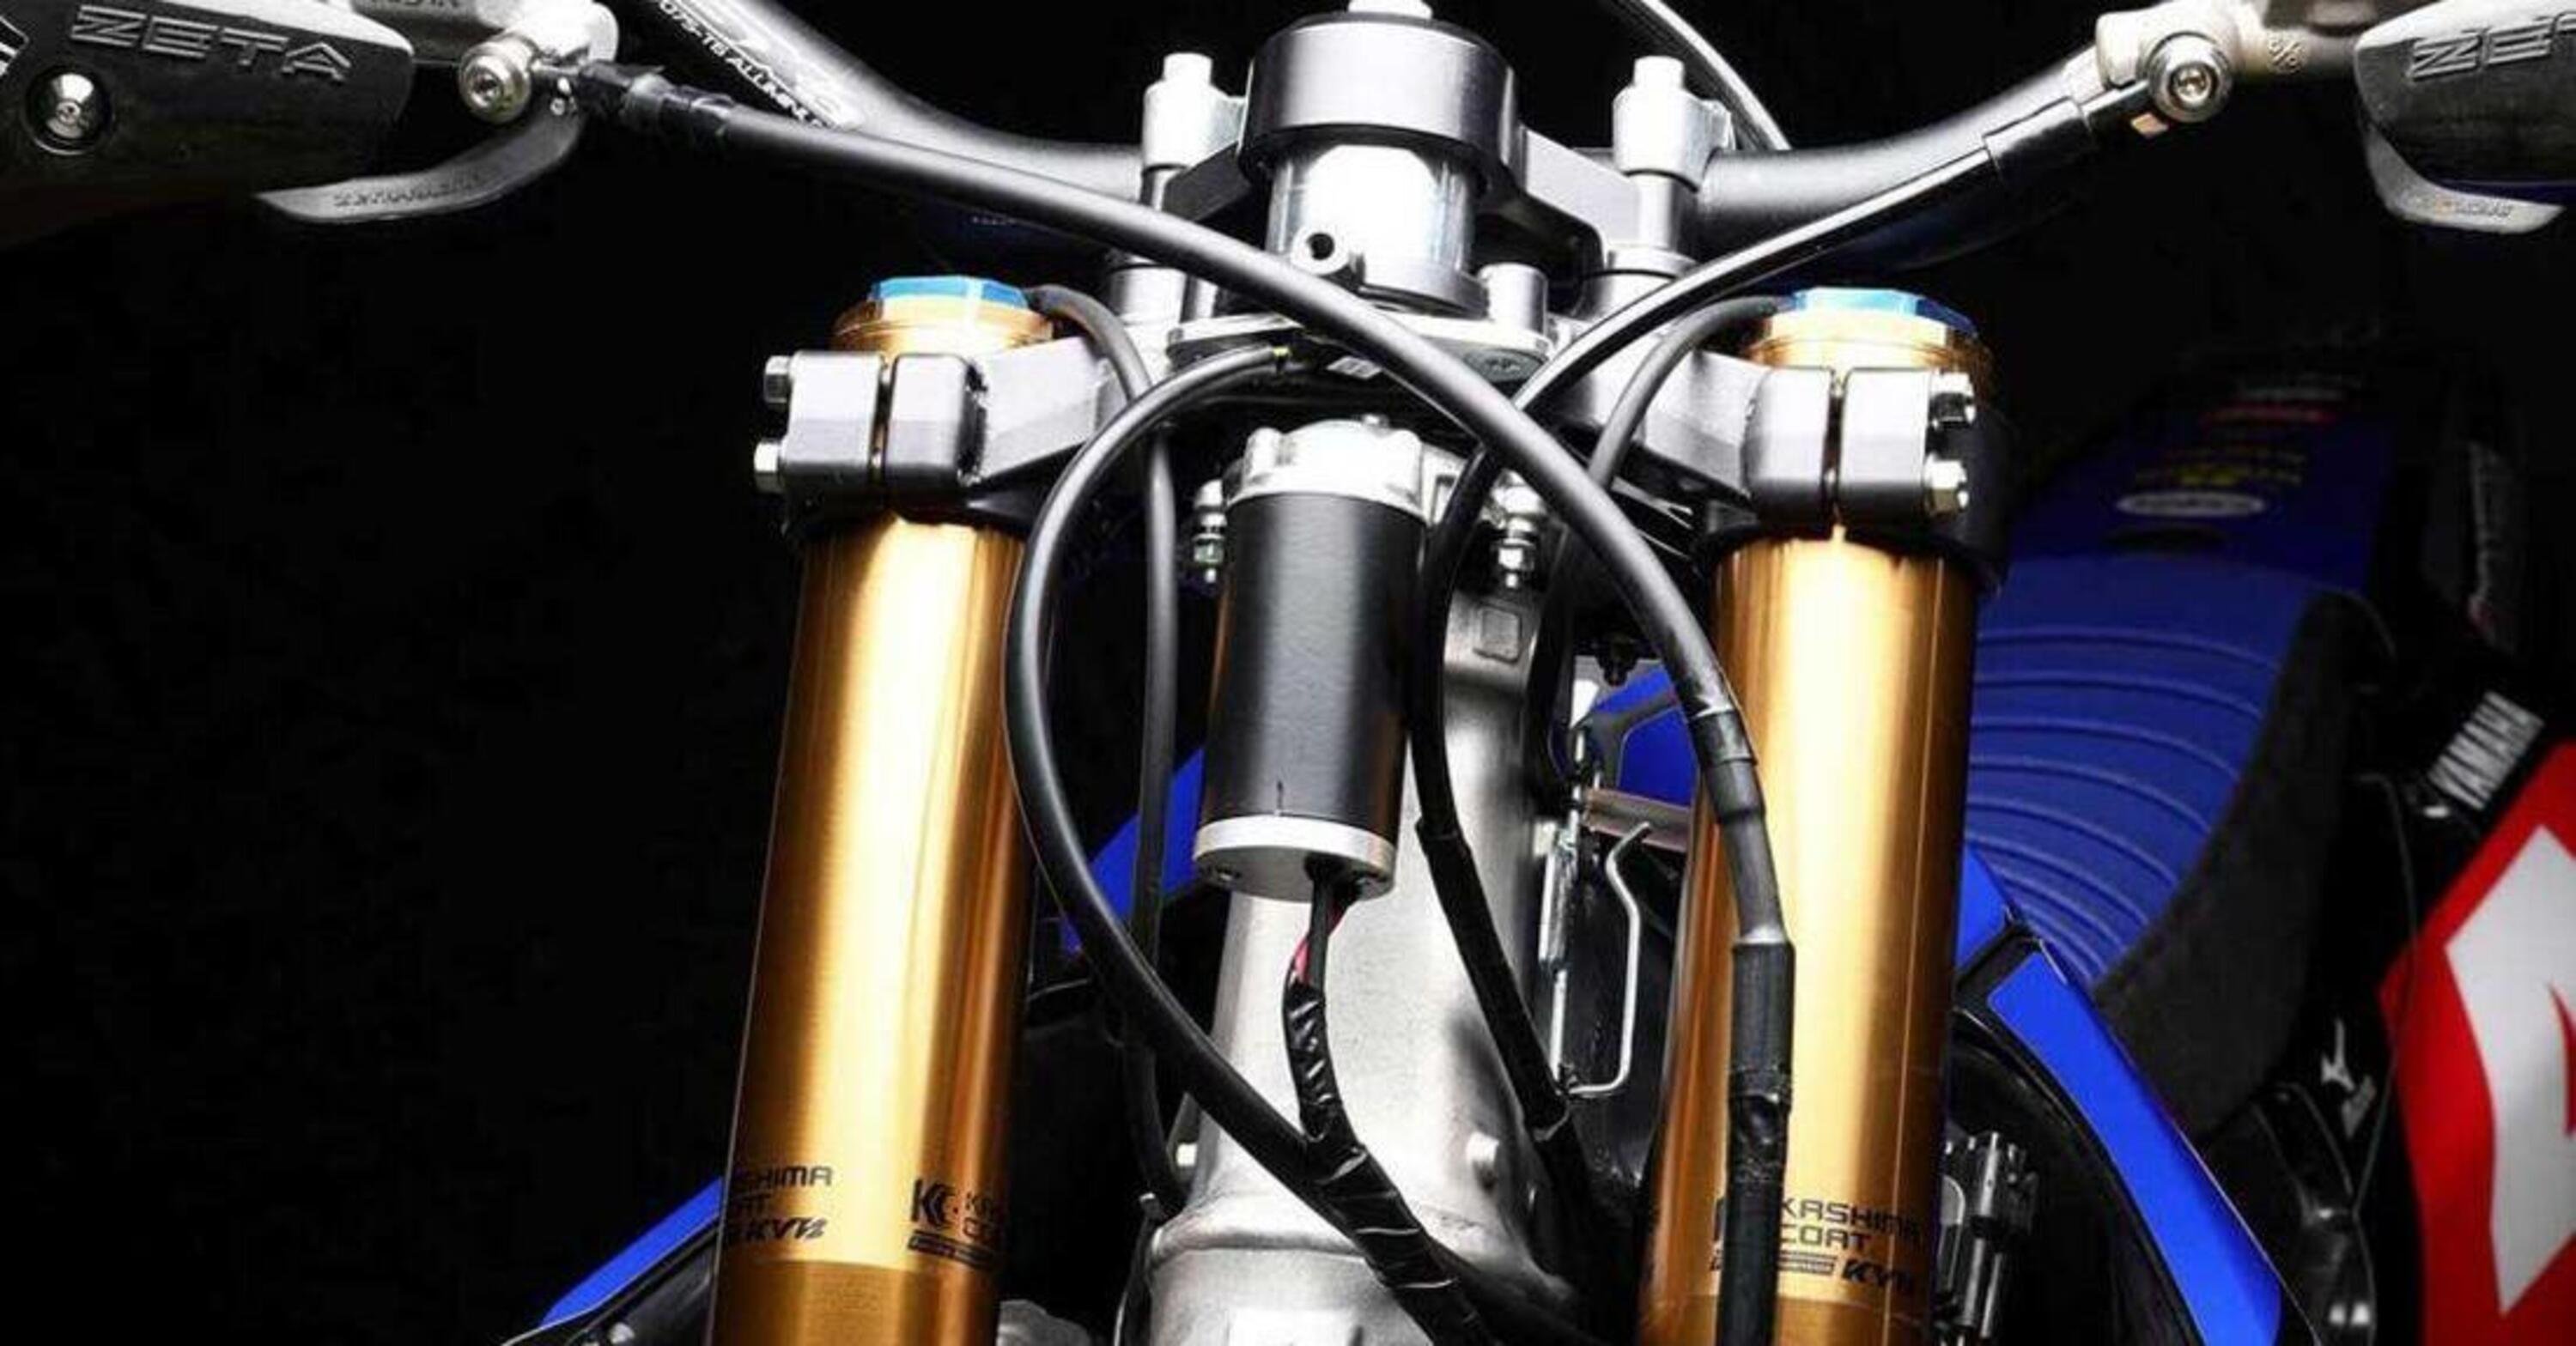 Yamaha introduce il servosterzo elettrico (EPS) sulle moto